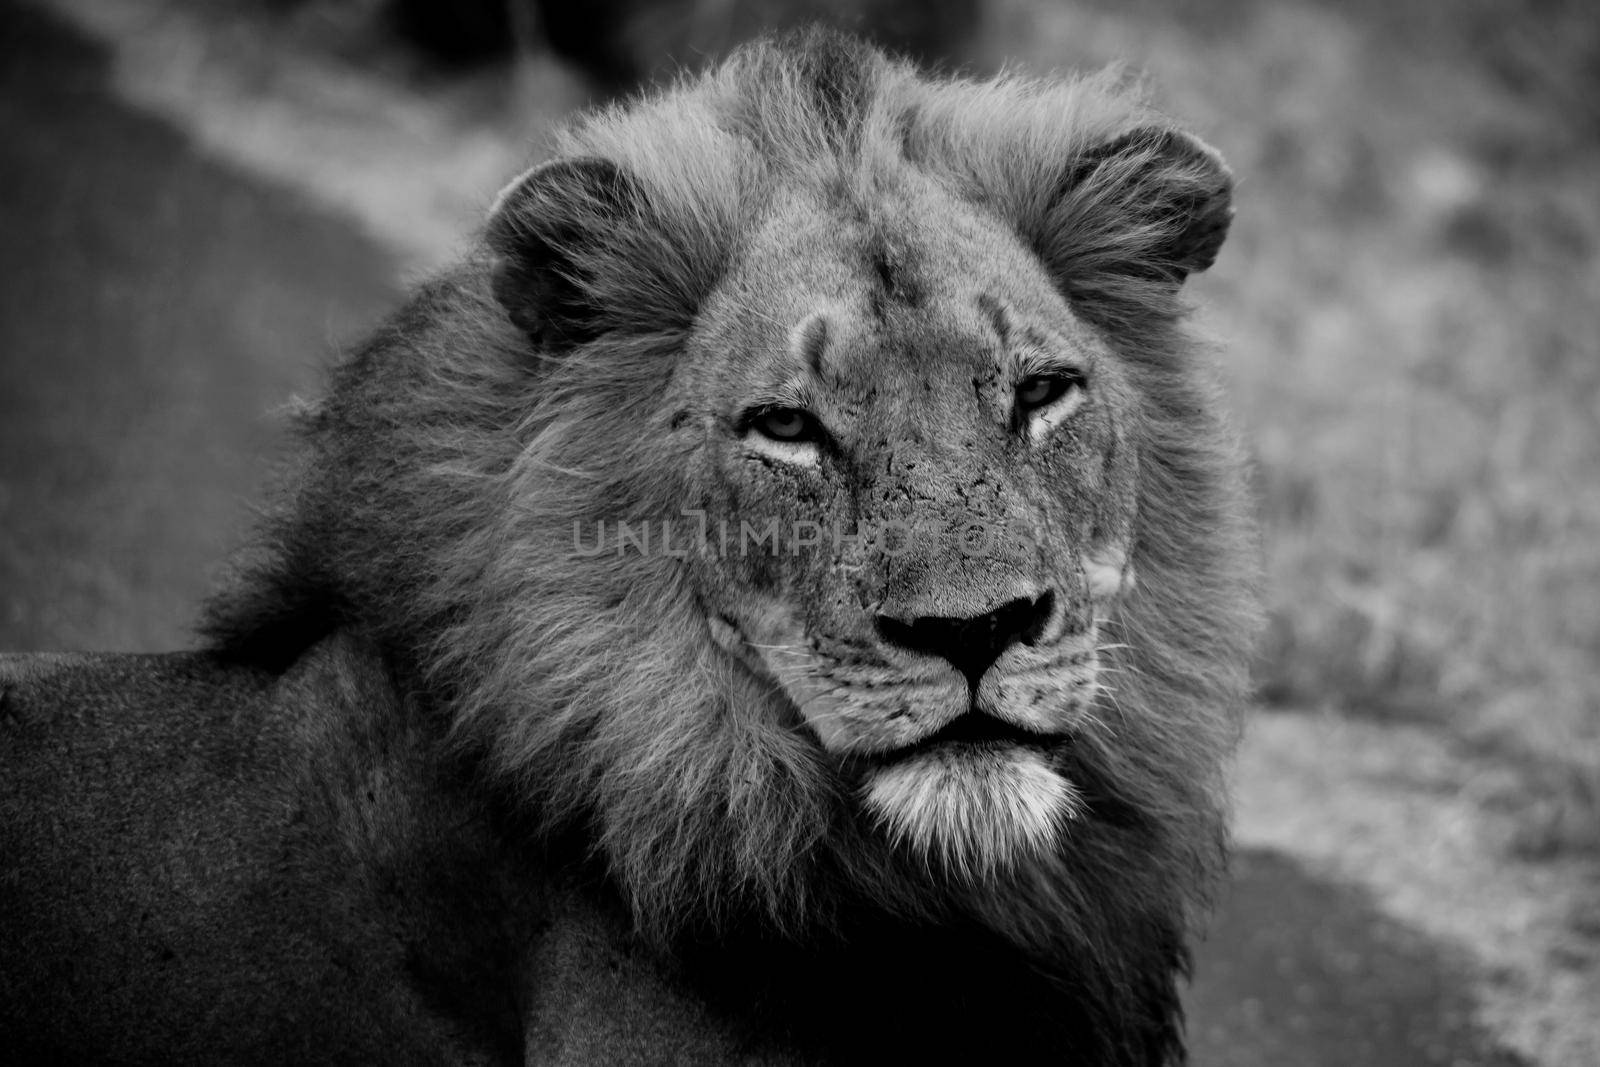 Monochrome Male Lion 14889 by kobus_peche